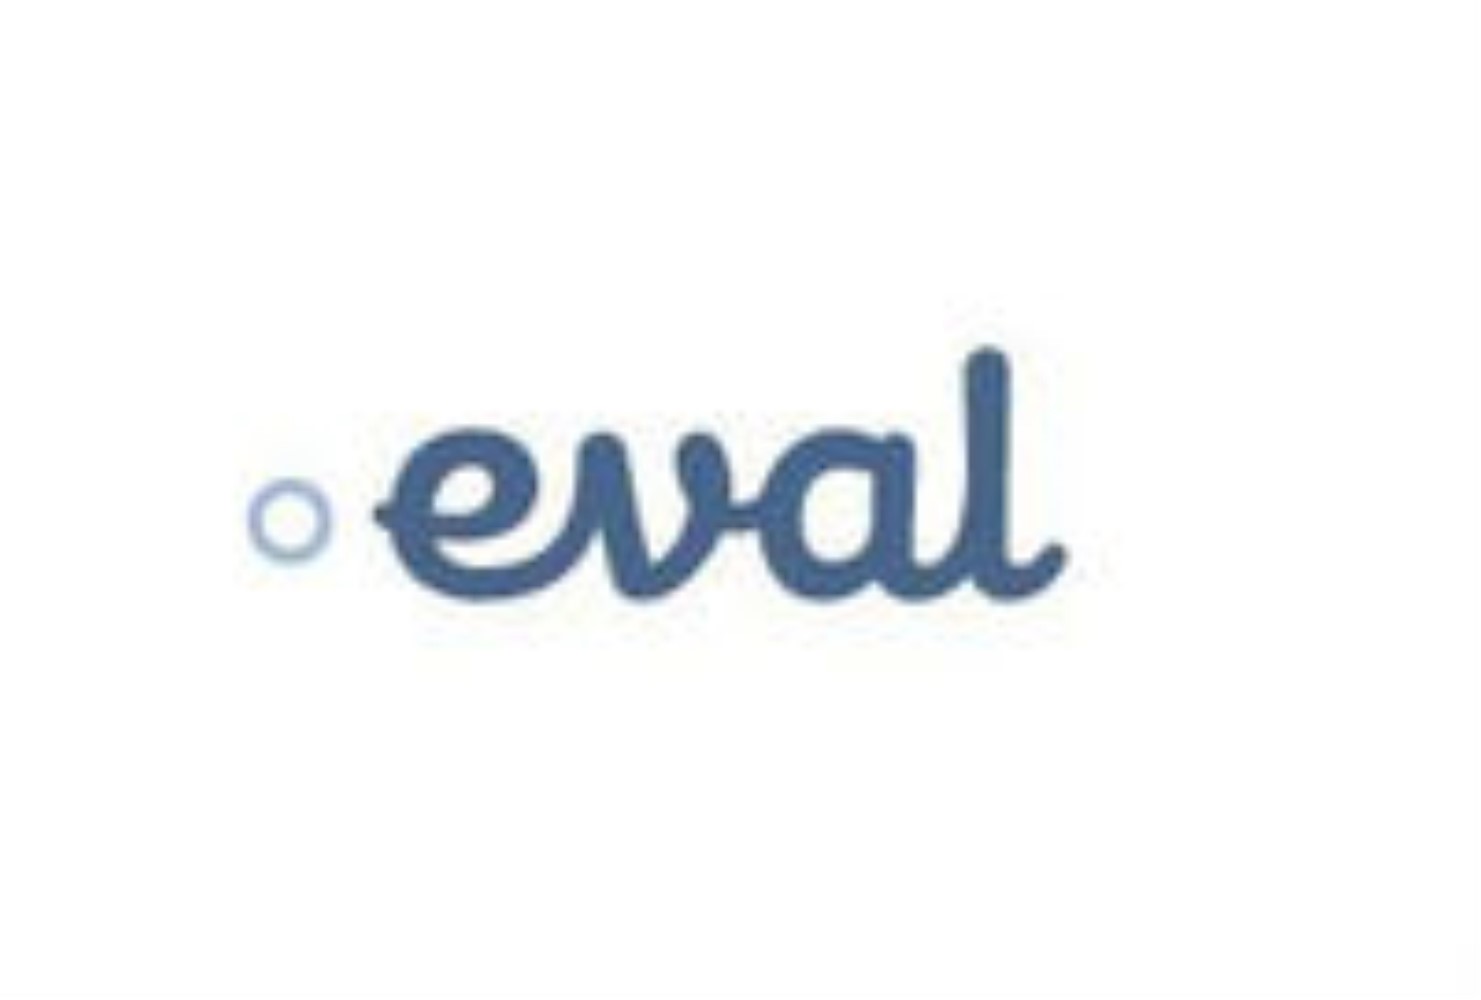 eval(Javascrip函式)